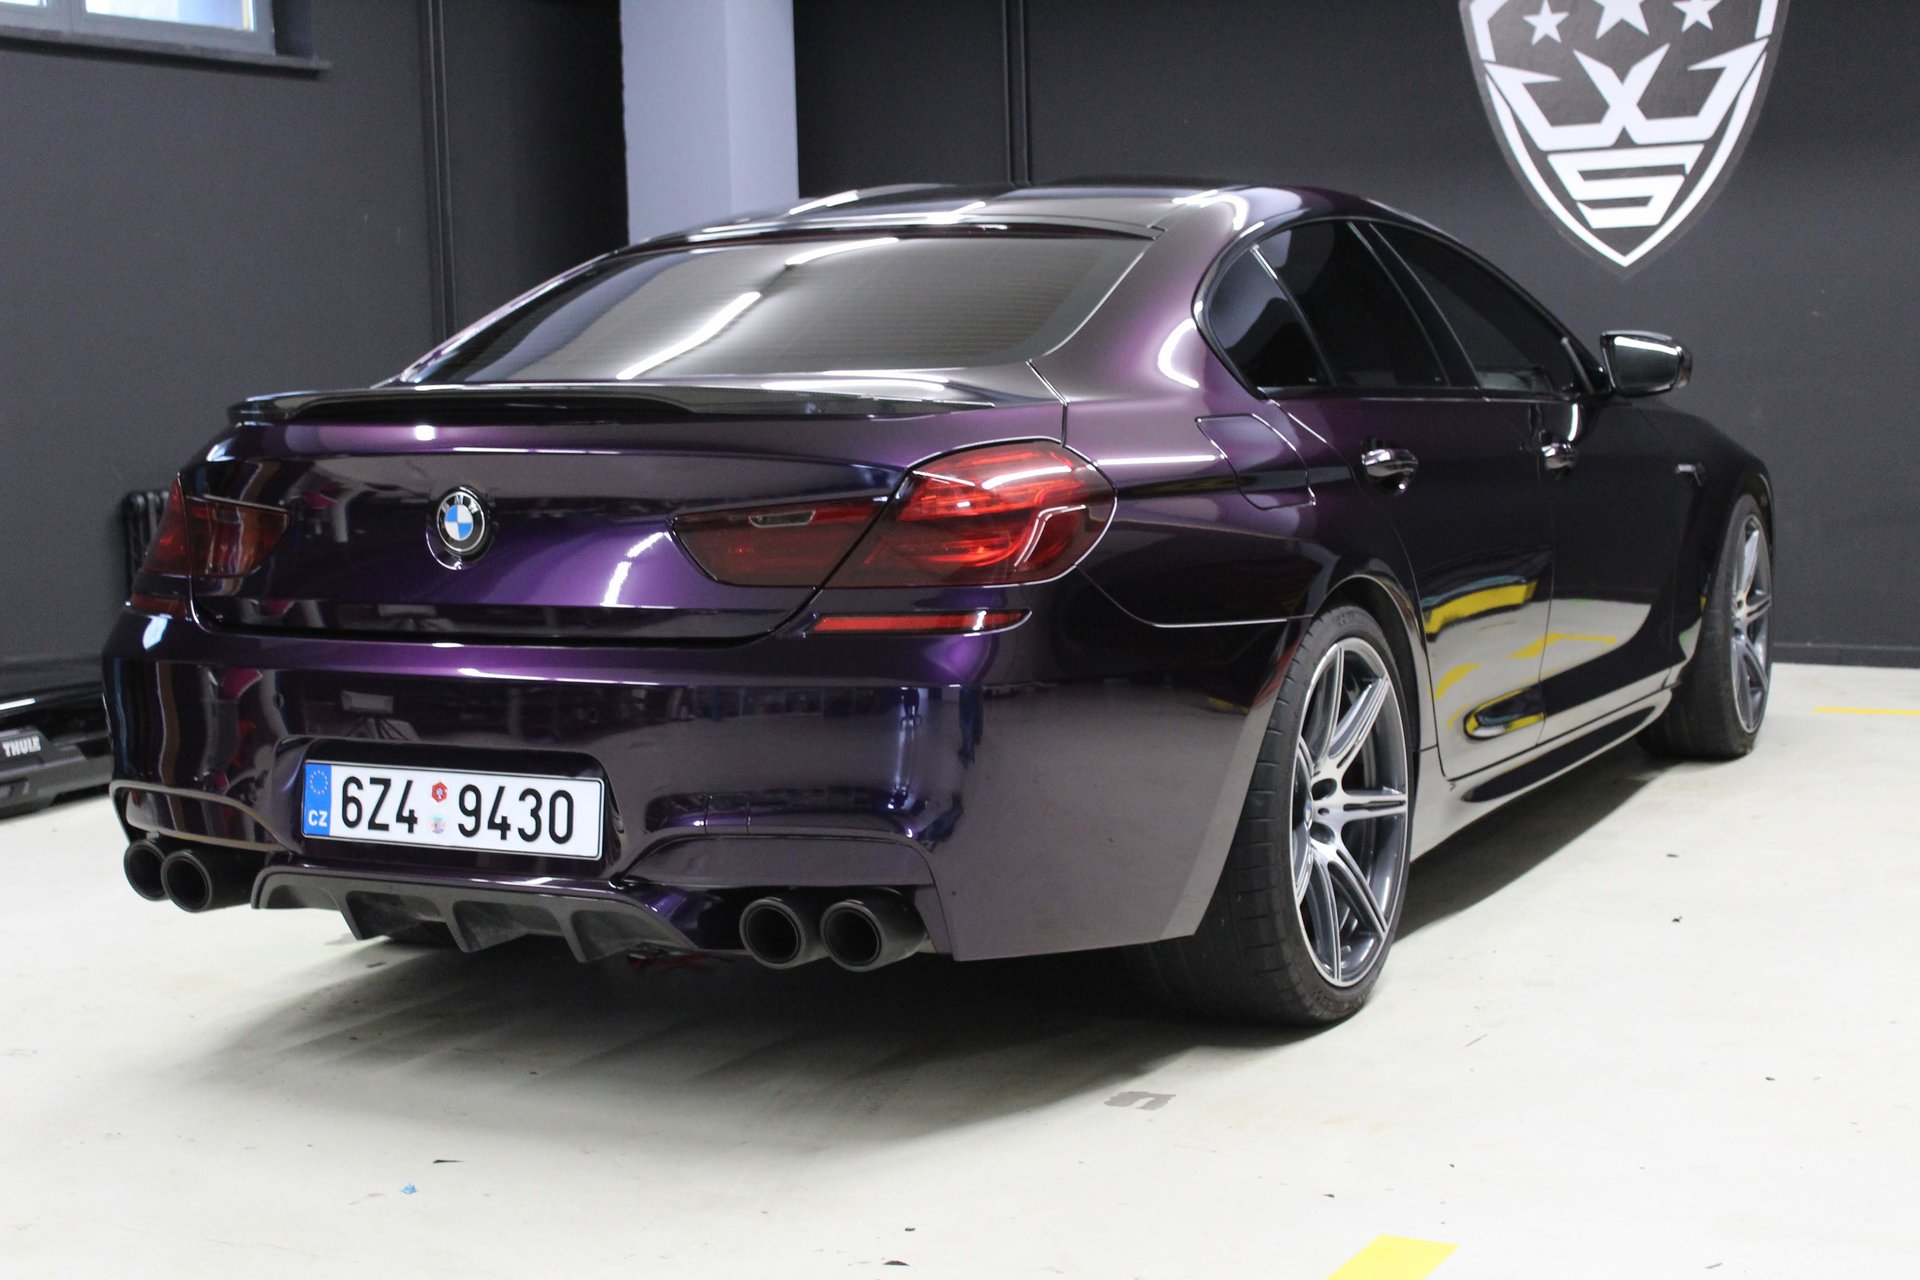 BMW M6 - Midnight Purple wrap